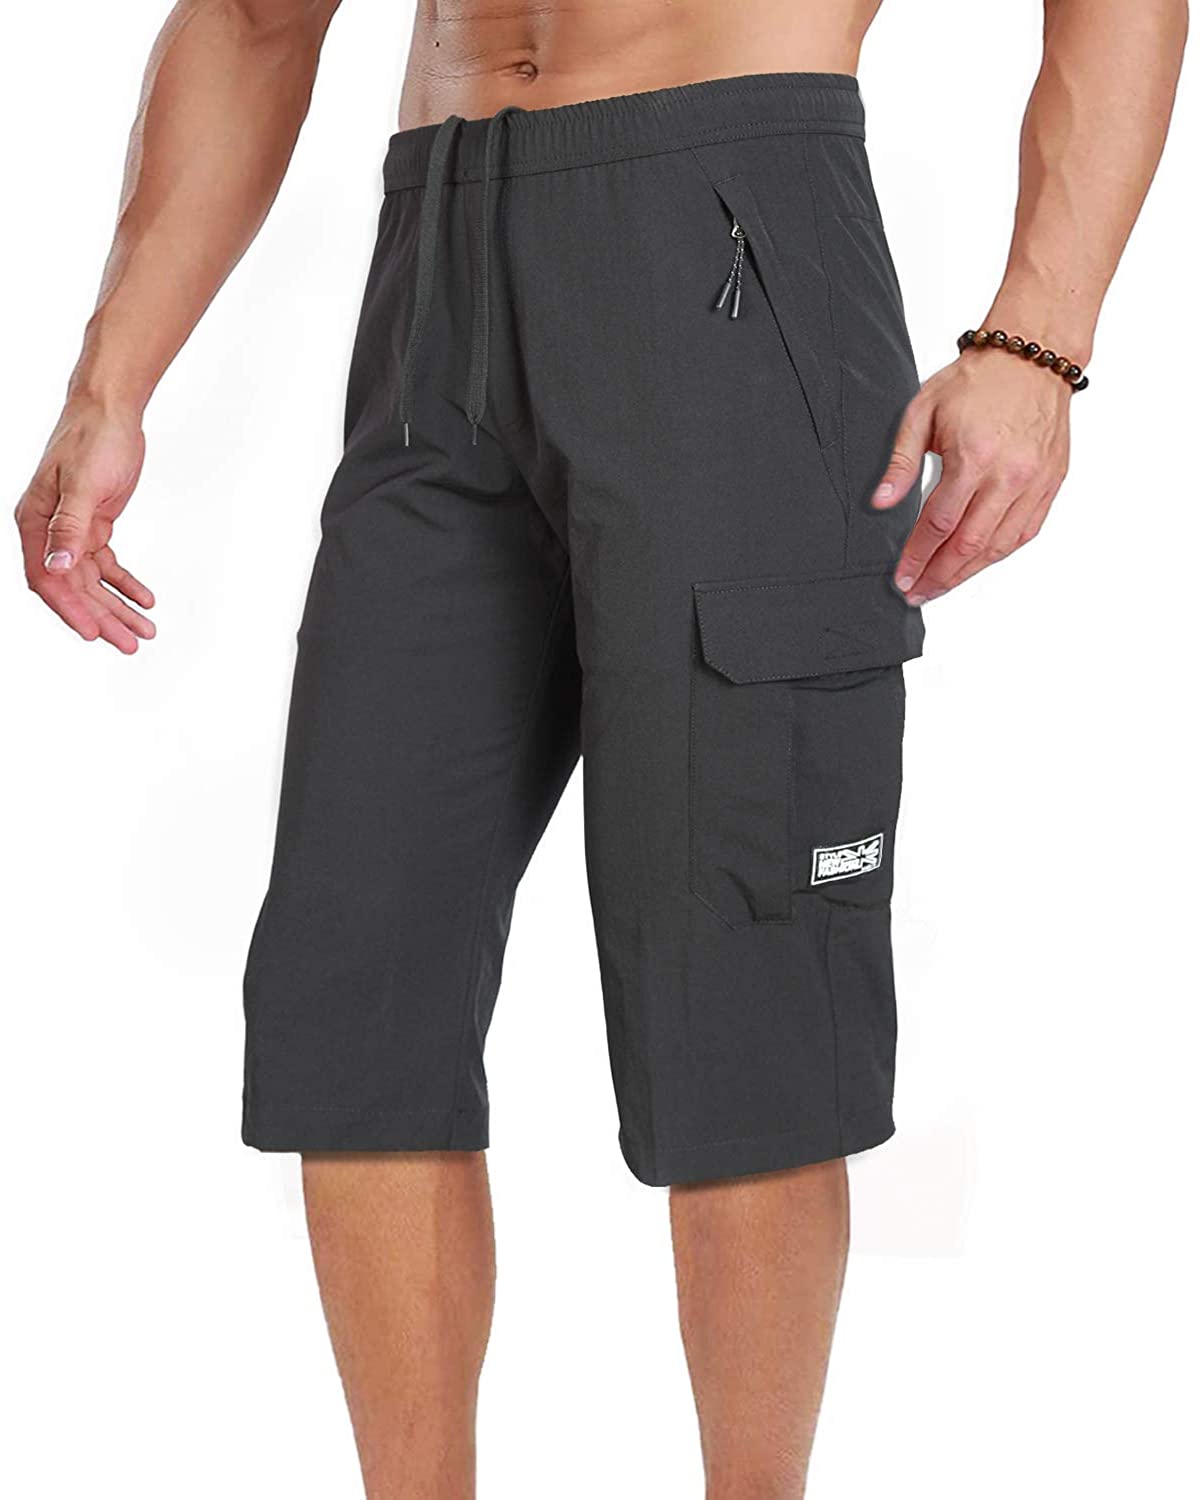 LACSINMO Men's Below Knee Shorts Quick Dry 3/4 Hiking Long Walking Shorts Summer Thin Capris with 4 Zipper Pockets 